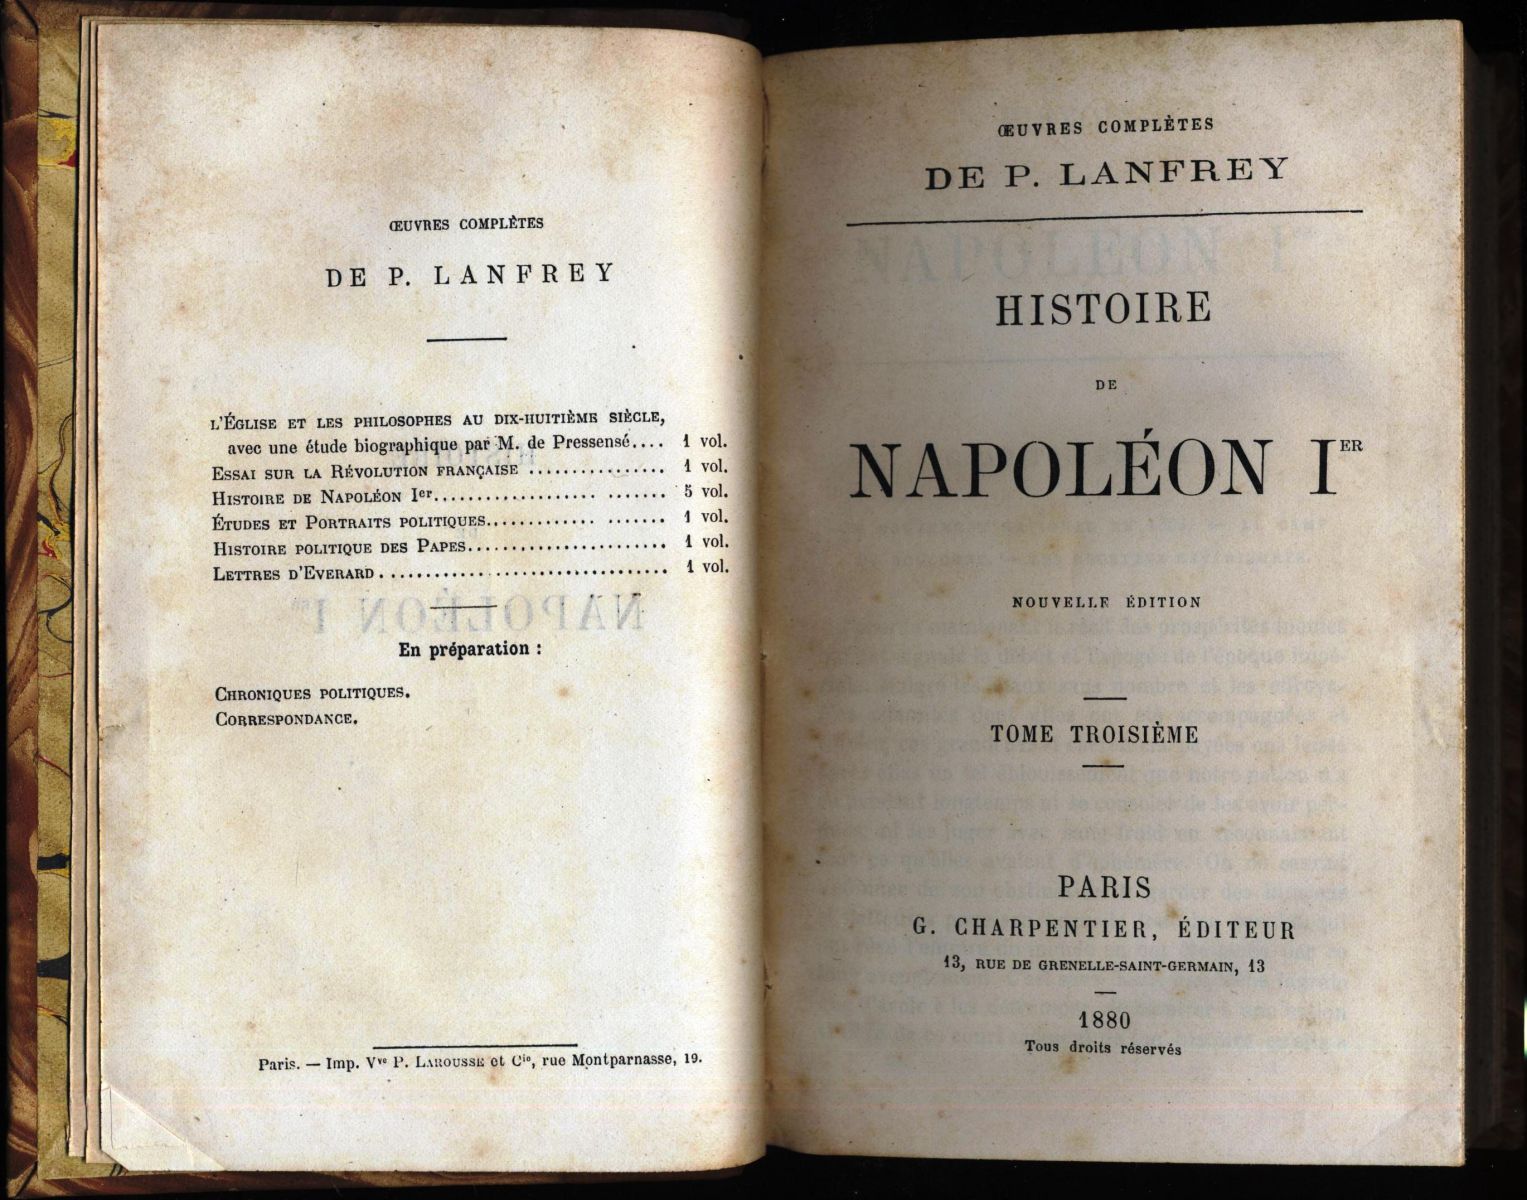 Histoire de Napol�on Ier en 5 volumes